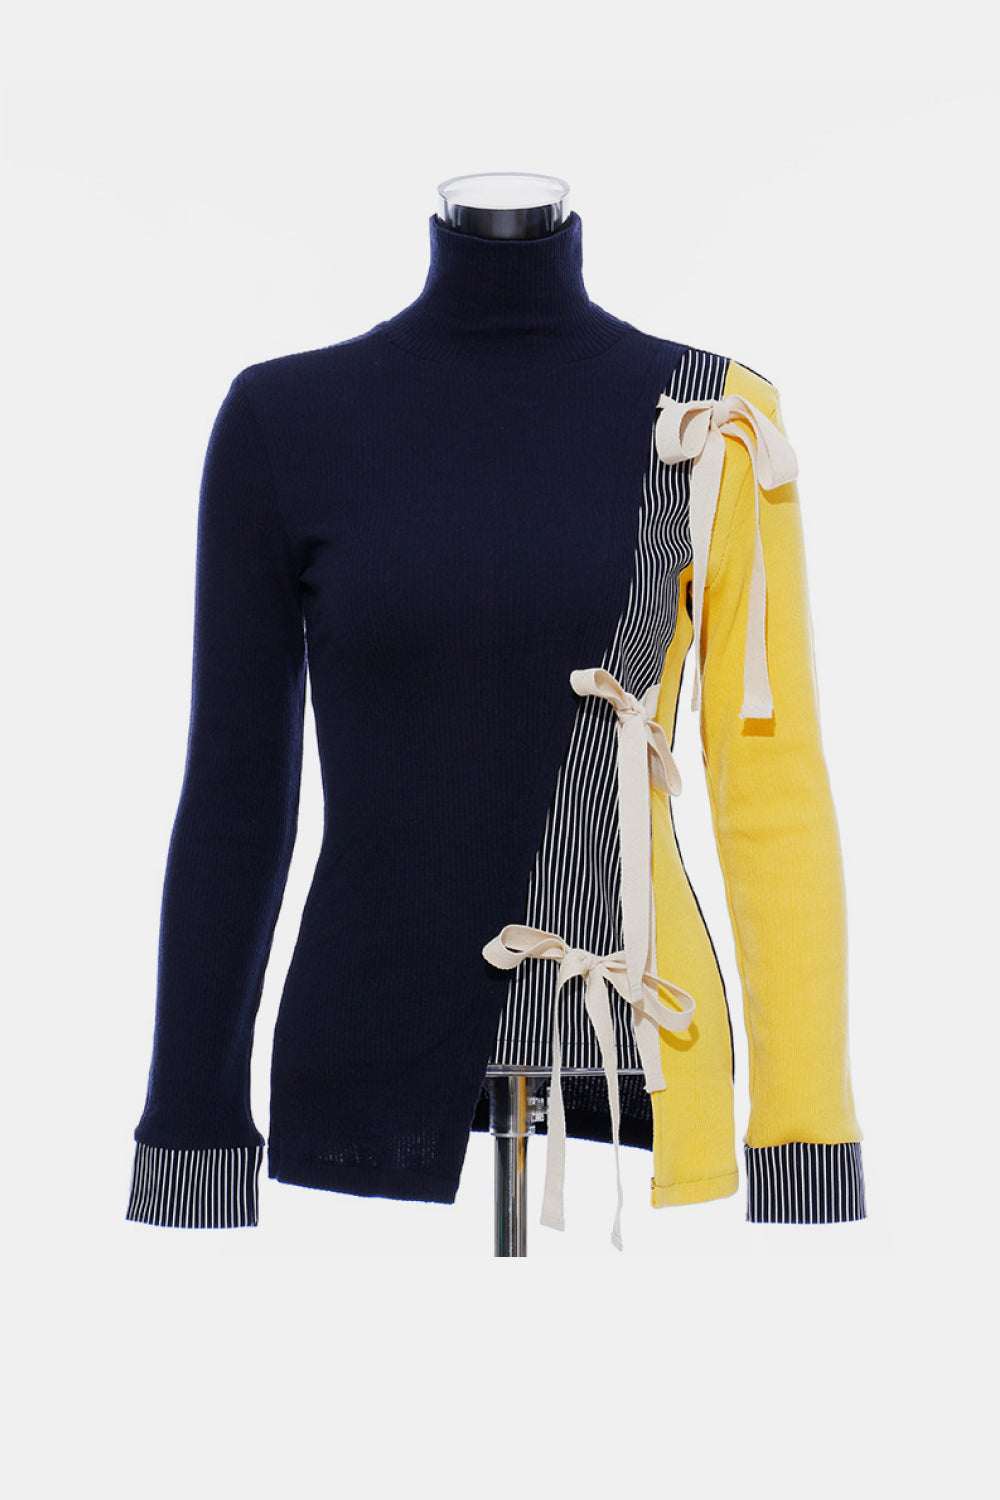 GAWQO Tie Detail Asymmetrical Hem Turtleneck Sweater